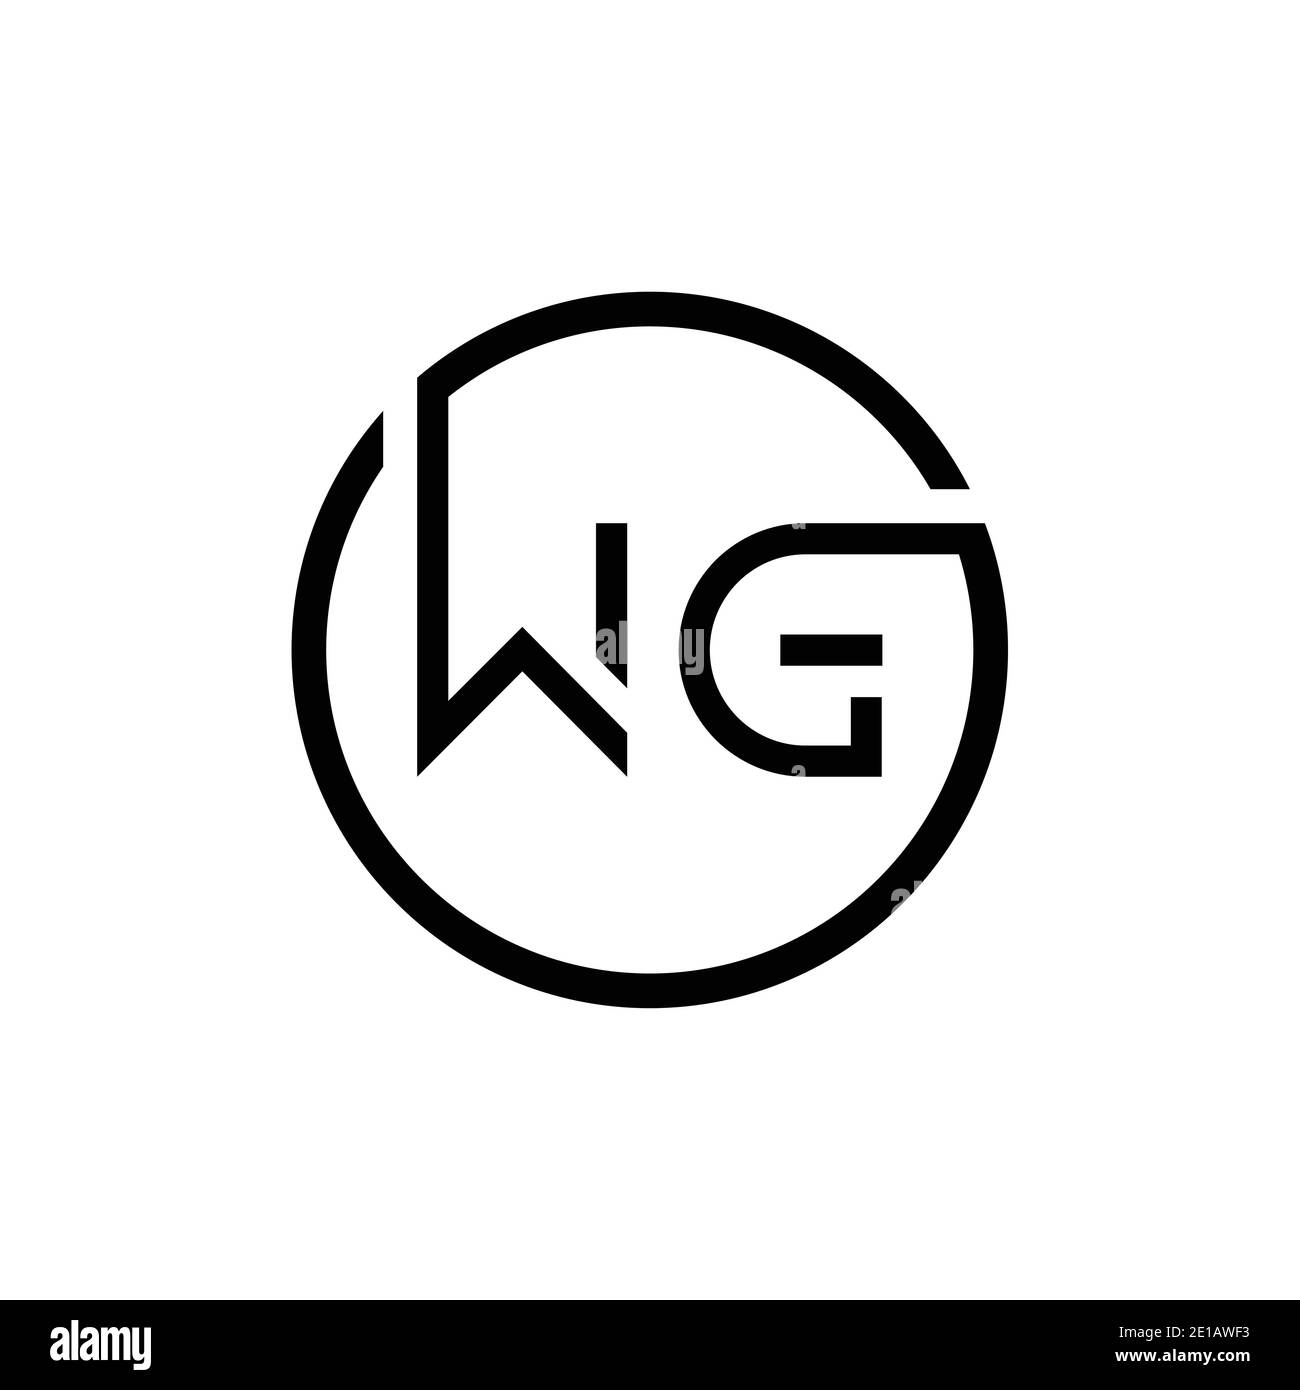 Initial Circle Letter WG Logo Design Vector Template. Initial Linked Letter WG Logo Design Stock Vector